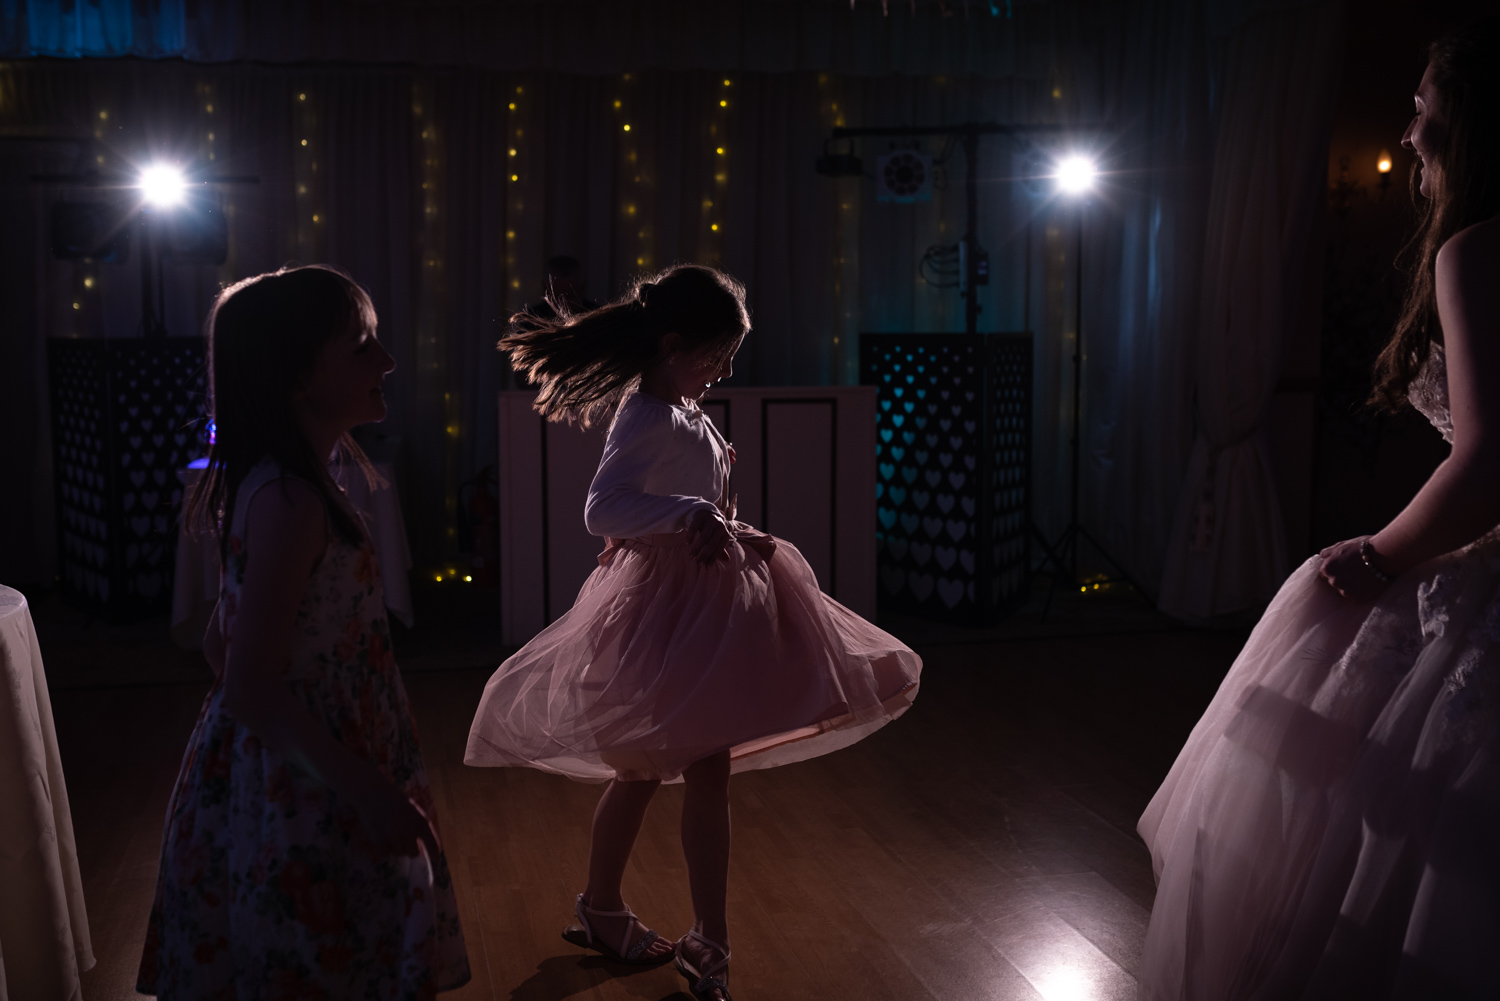 Children dancing at evening wedding party